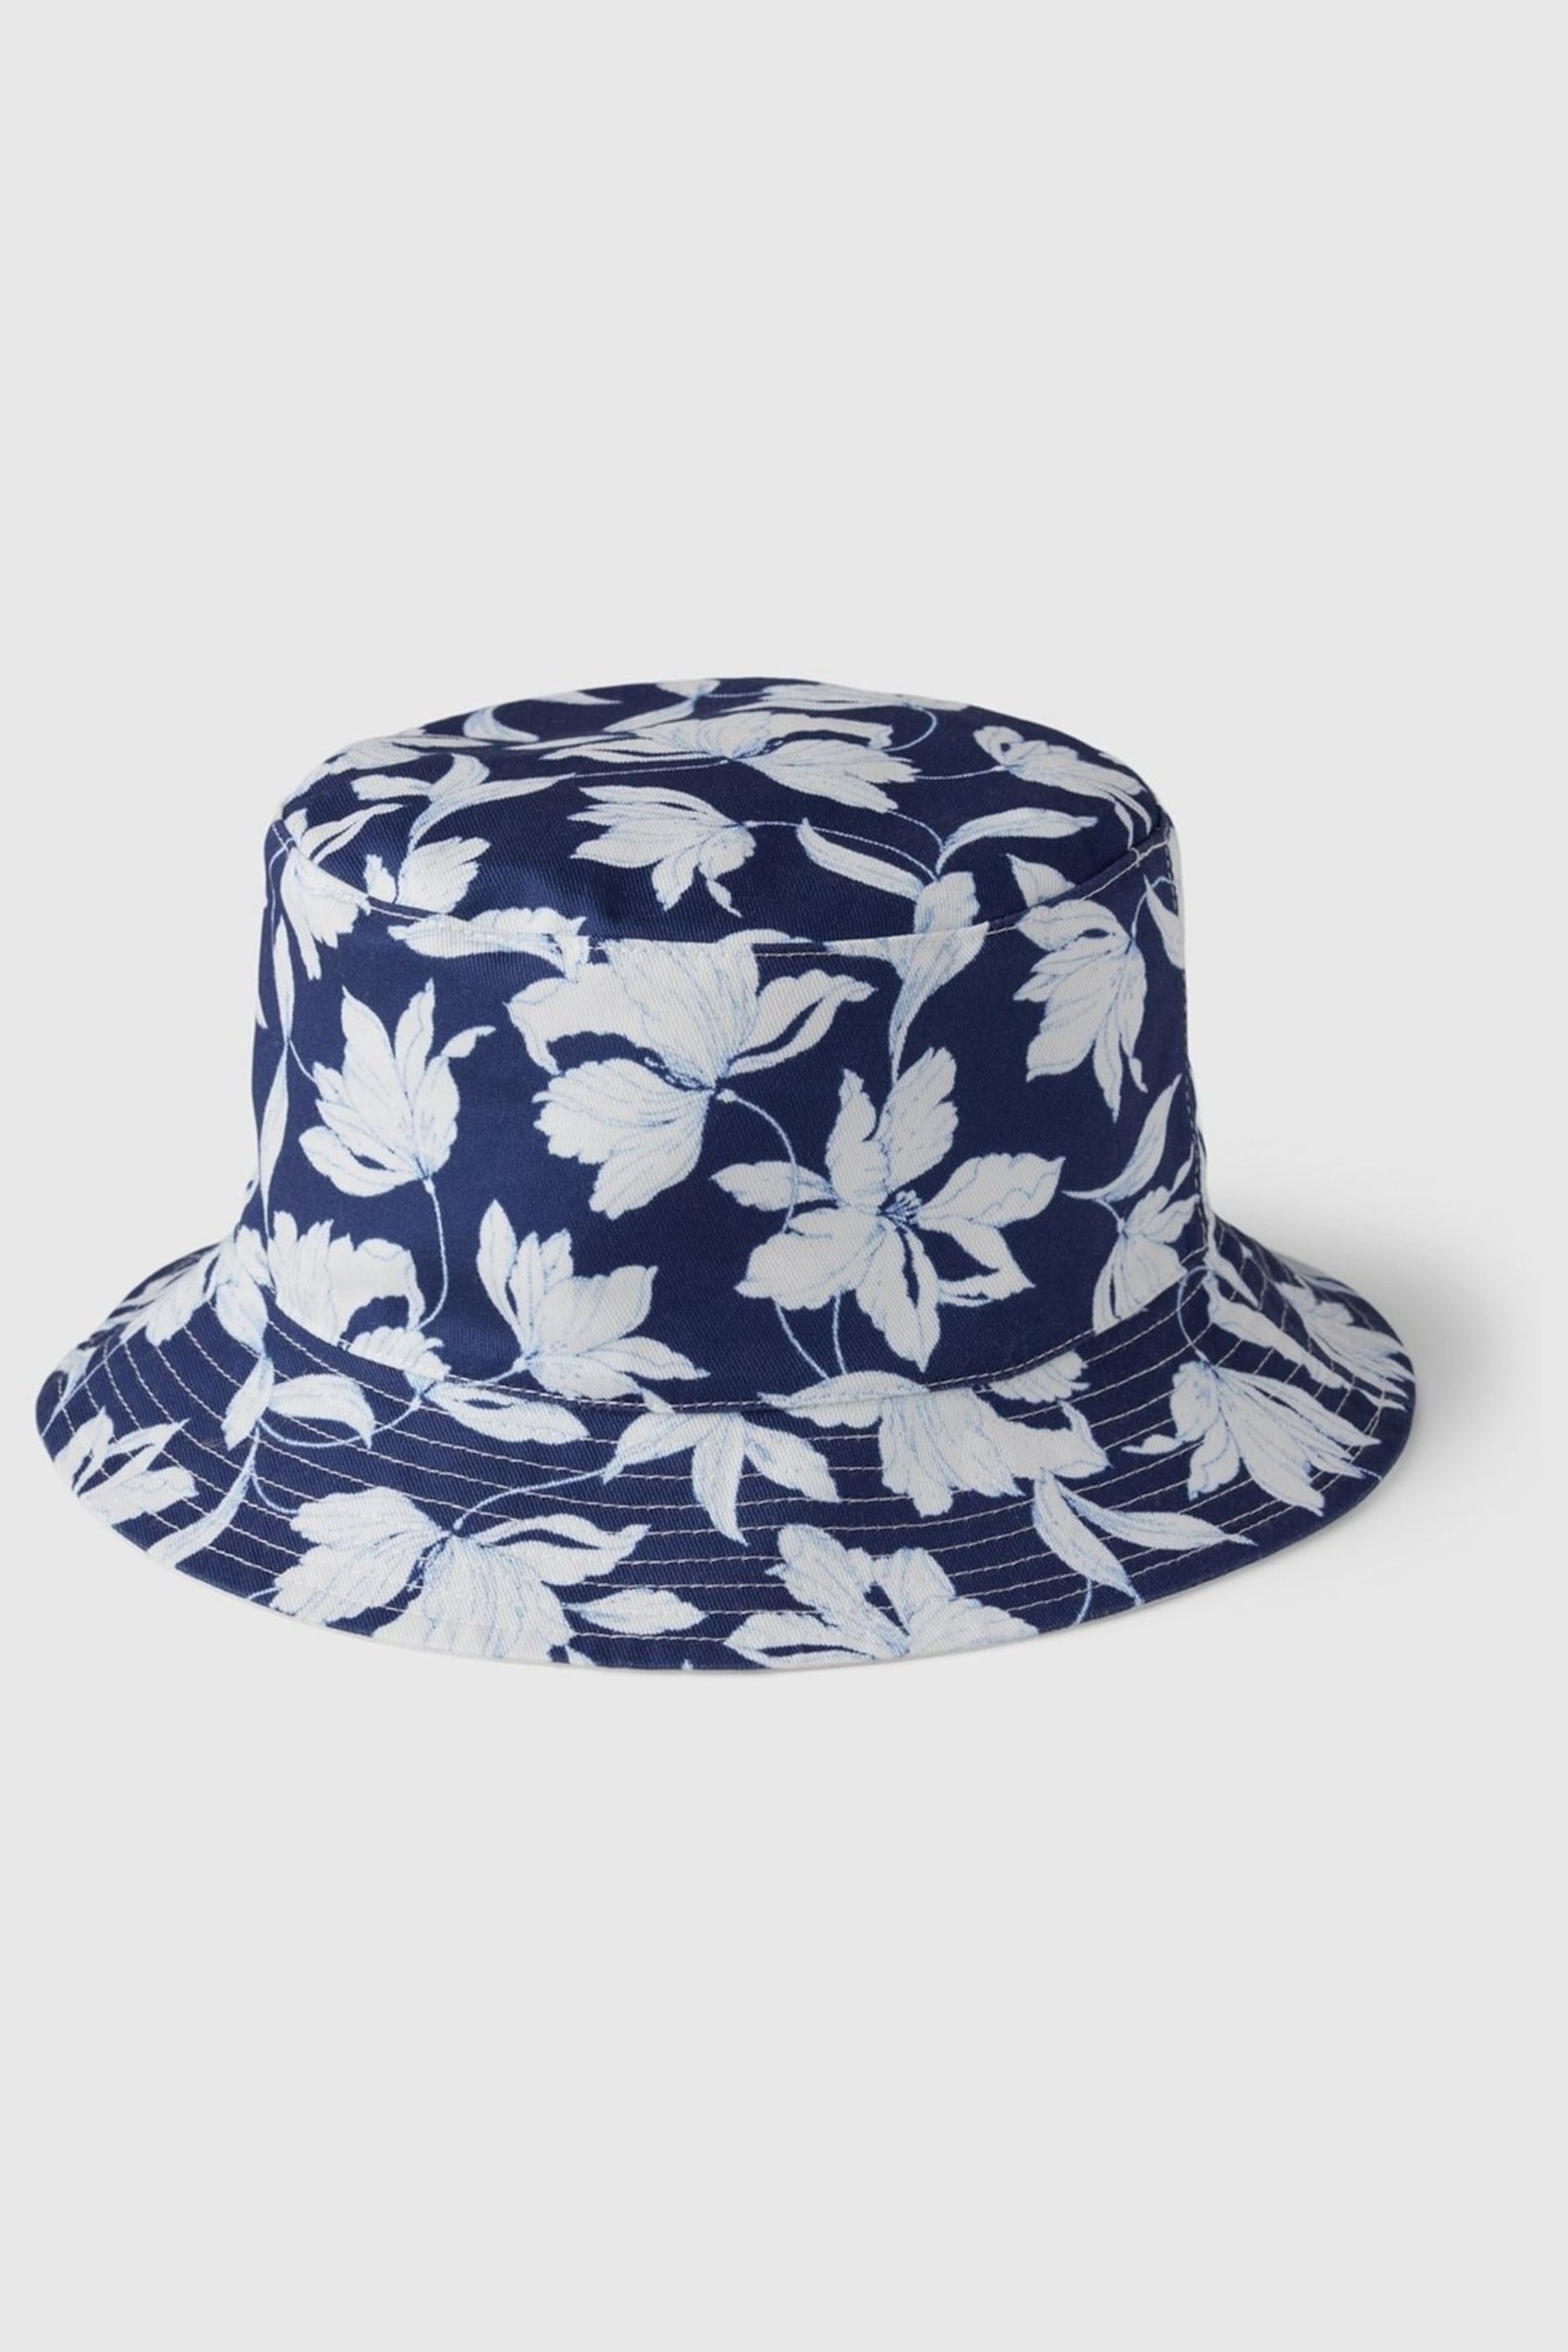 Gap Blue Floral Kids Organic Cotton Print Bucket Hat - Image 2 of 2